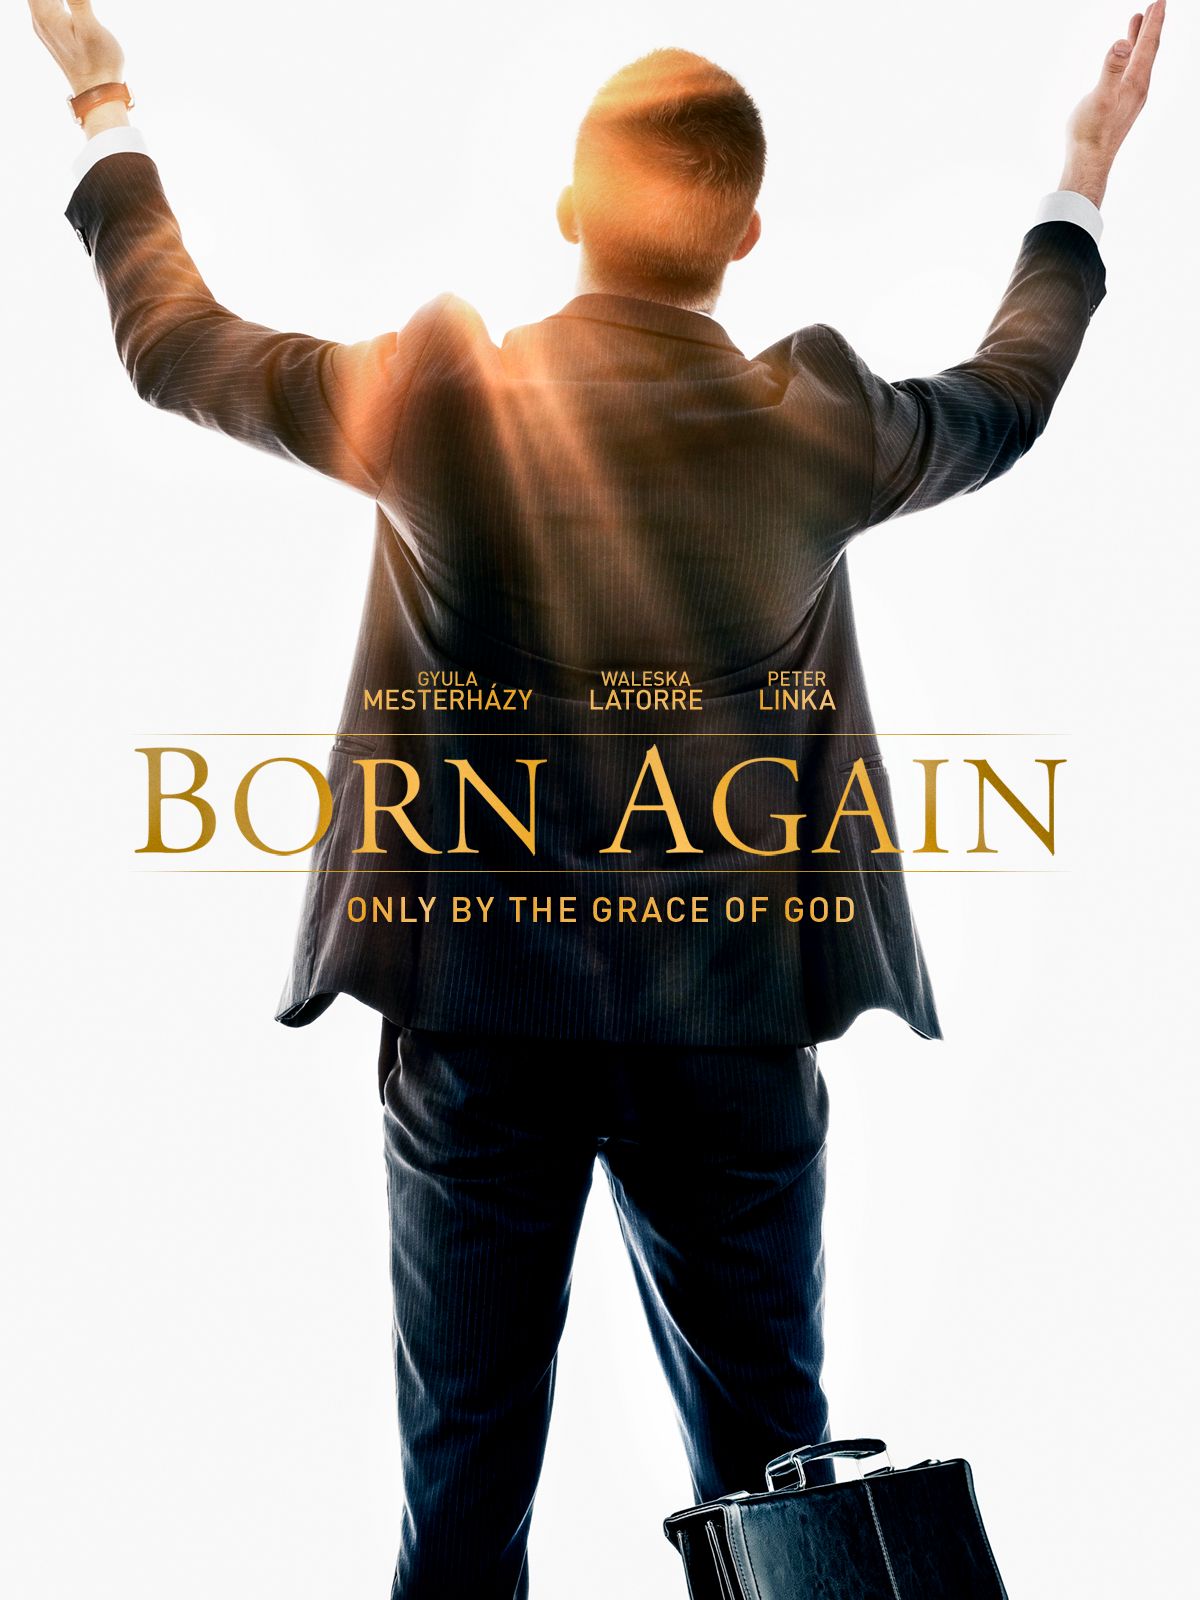 Keyart for the movie Born Again